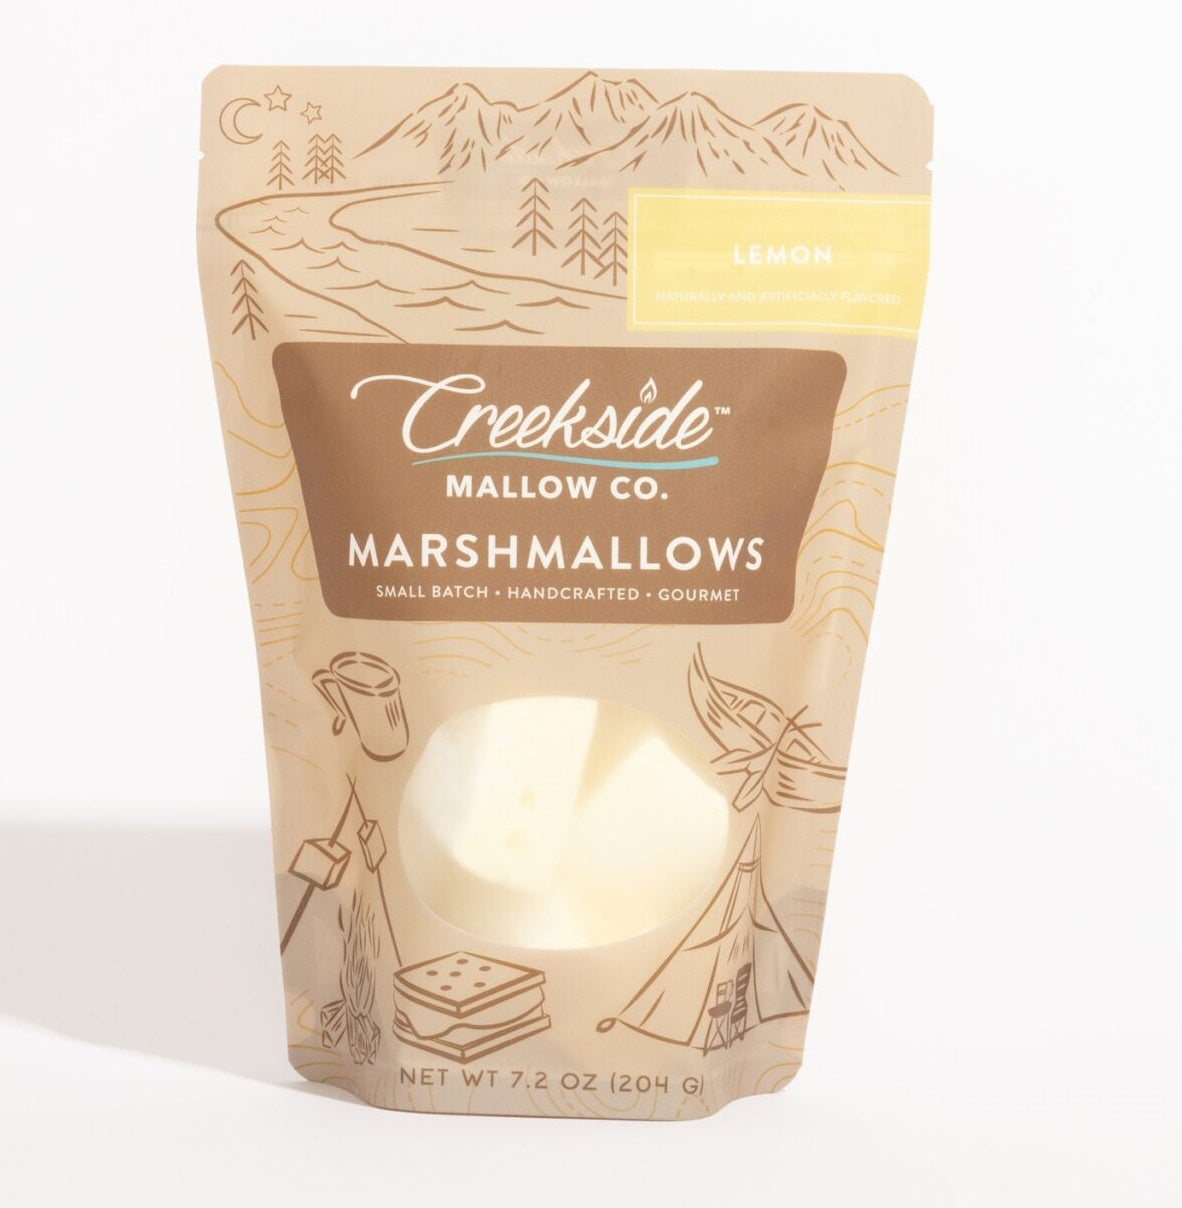 Lemon Creekside Marshmallows